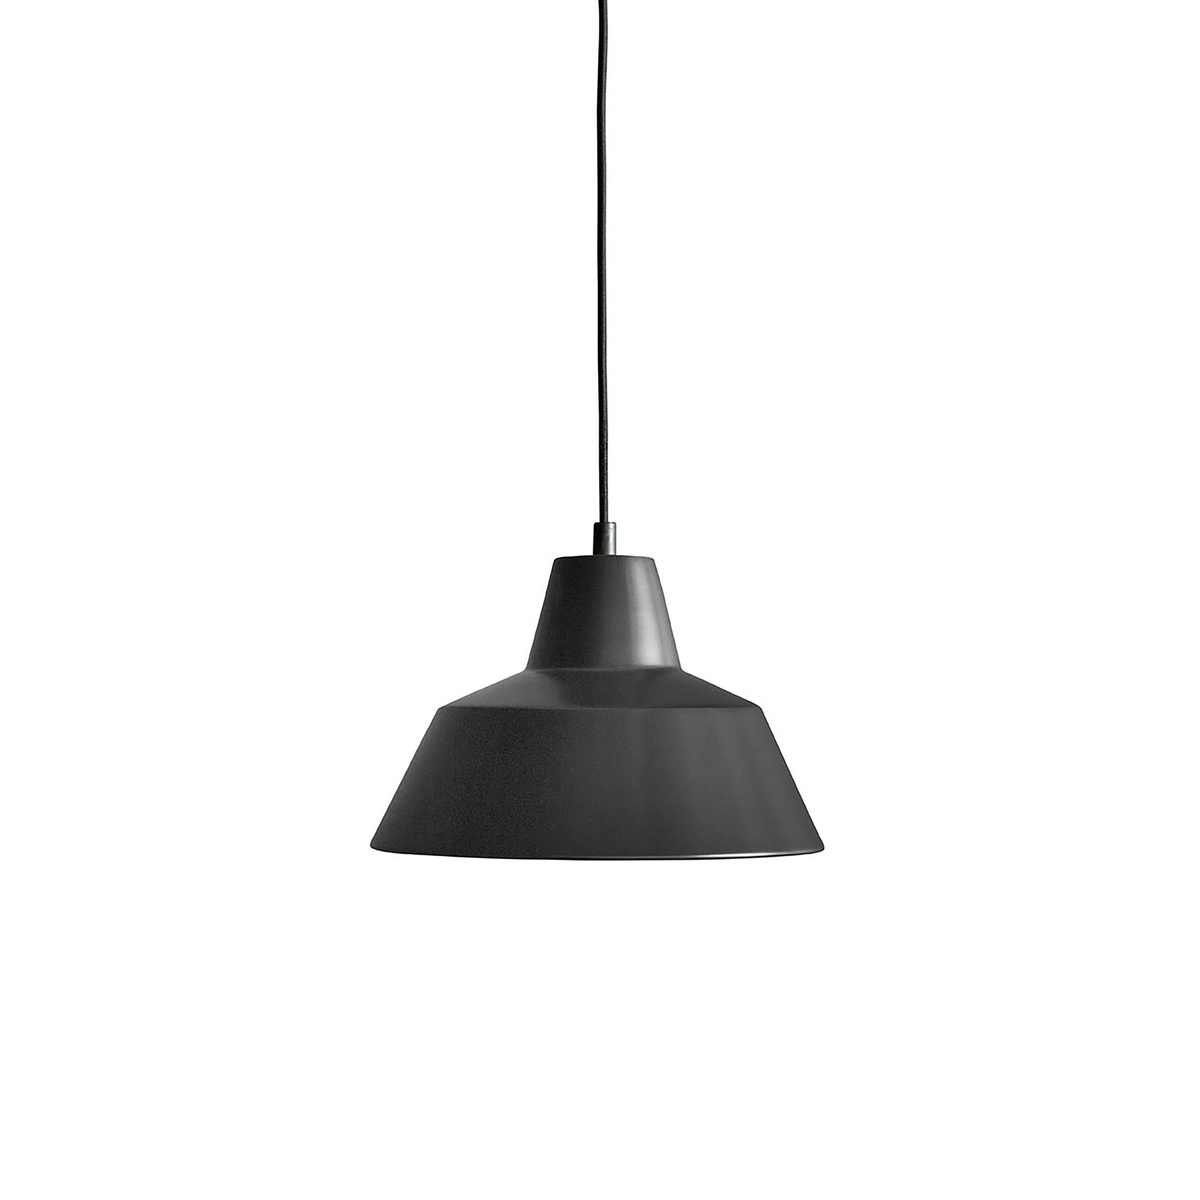 Made by Hand, Workshop Pendant Lamp W2, Matte Black, Pendant, A. Wedel-Madsen,